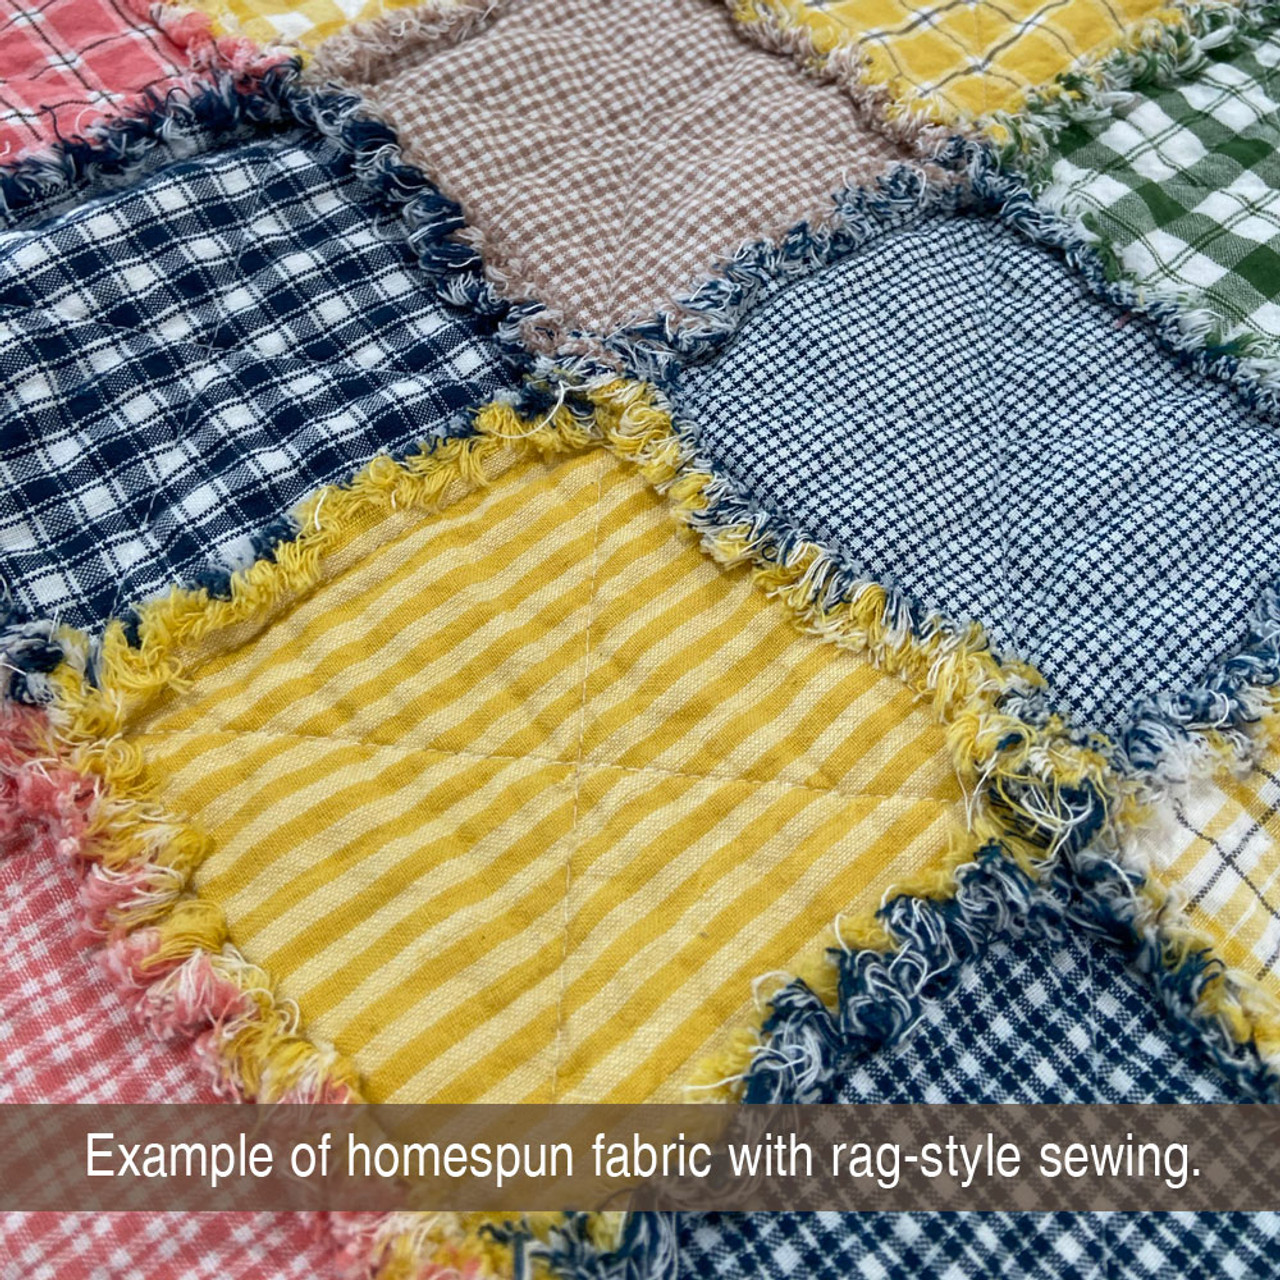 Clearance!  Summer Yellow Stripe Homespun Cotton Fabric